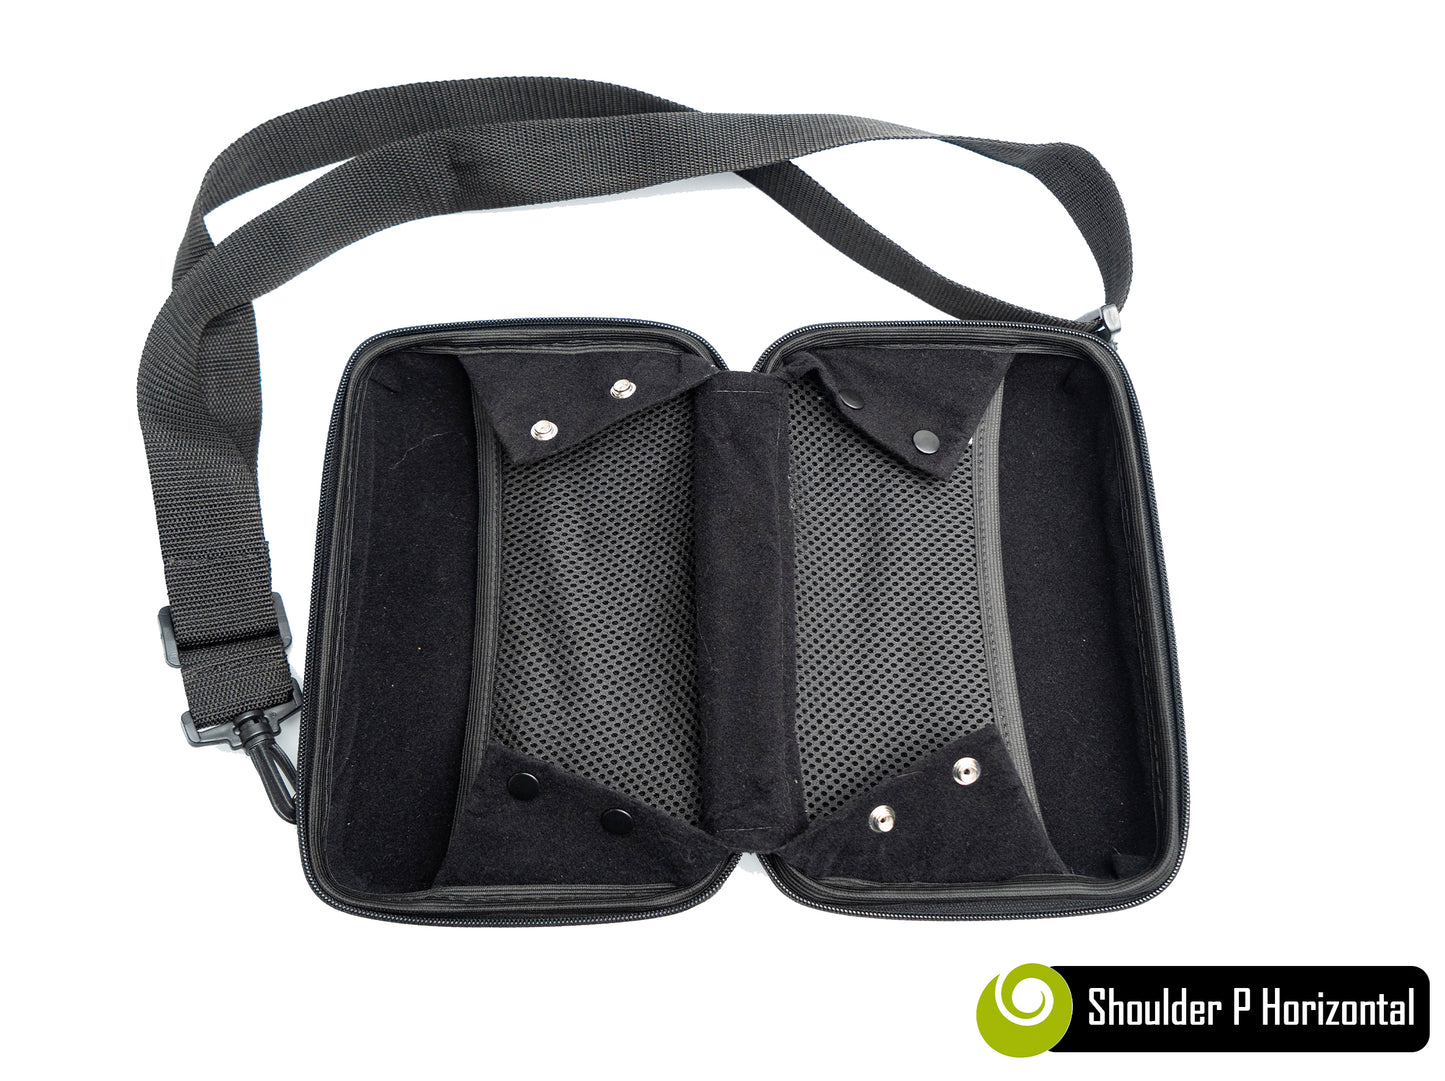 Bolsa Shoulder Bag P Horizontal - Santos - Pochete Slim Kameleon